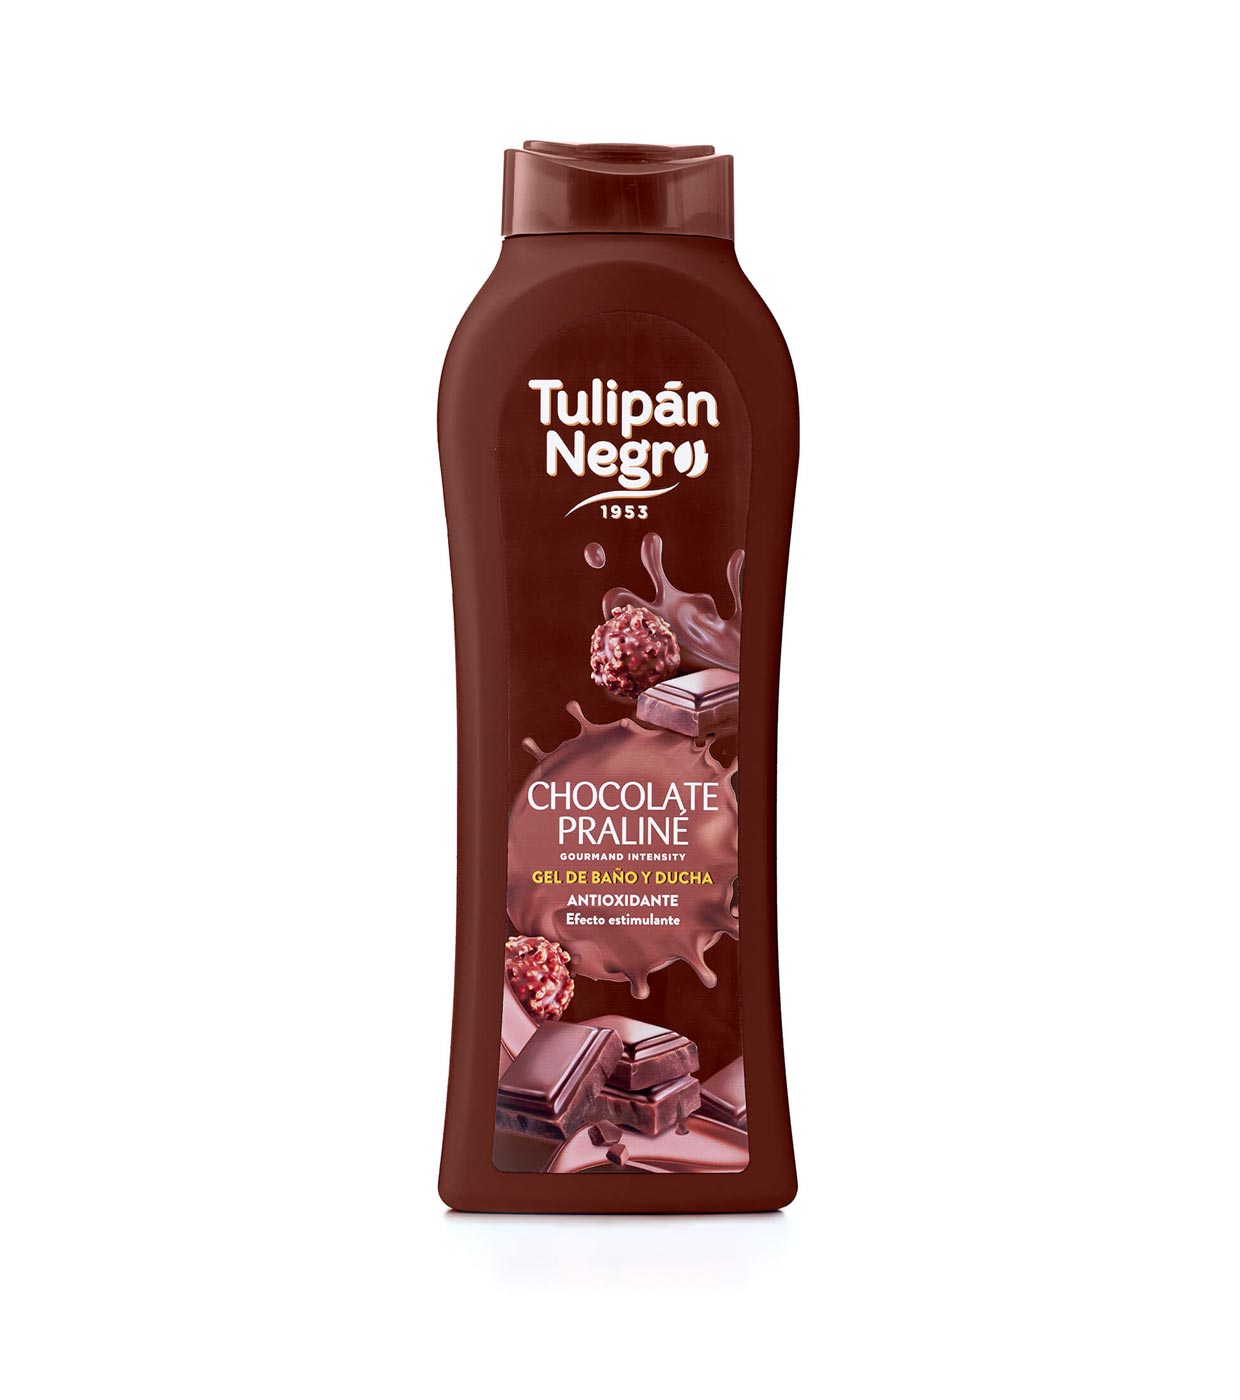 Buy Tulipán Negro - *Gourmand Intensity* - Bath gel 650ml - Nube